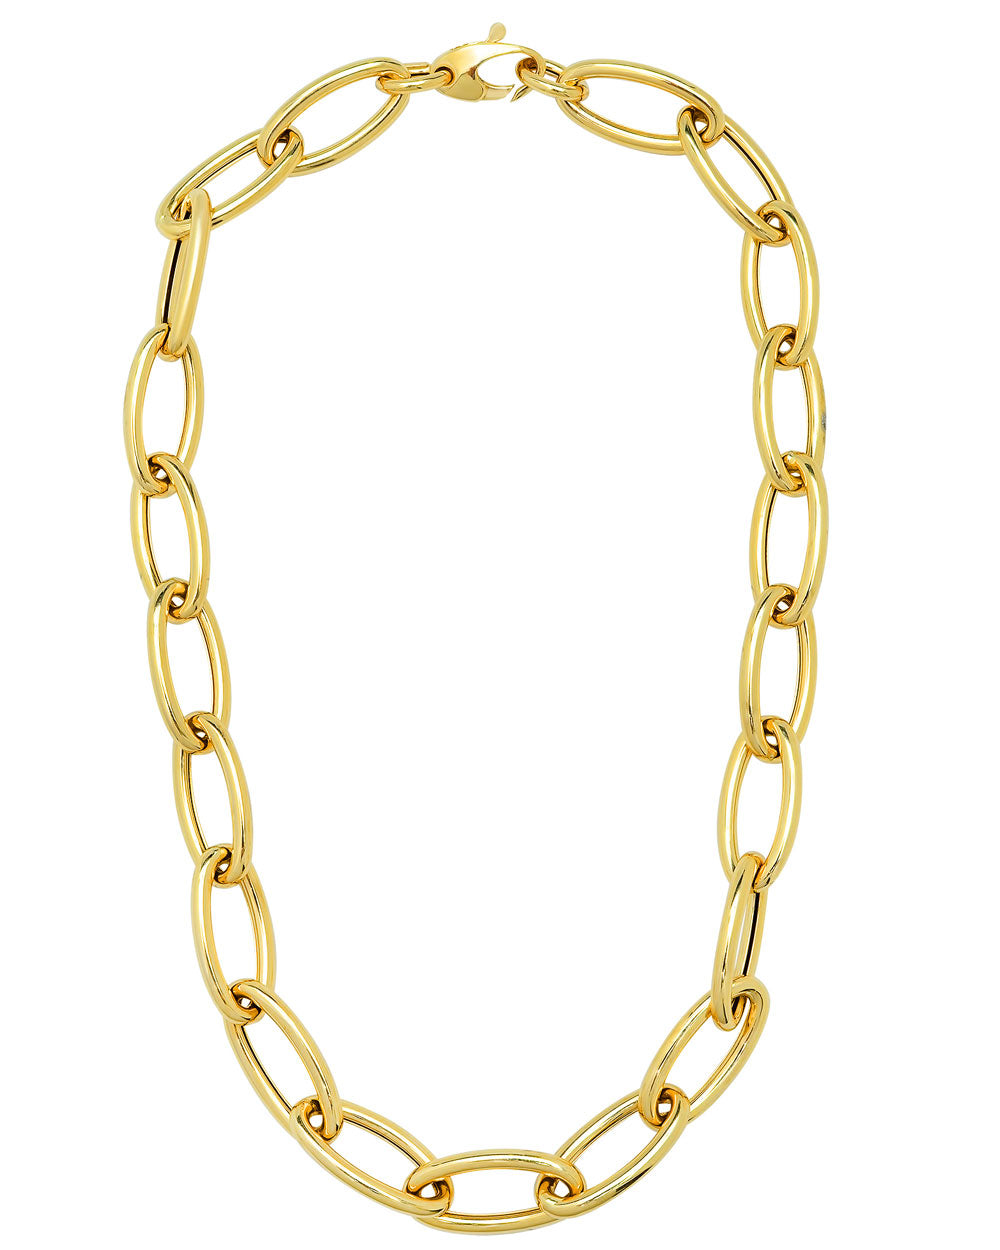 Yellow Gold Jumbo Link Necklace